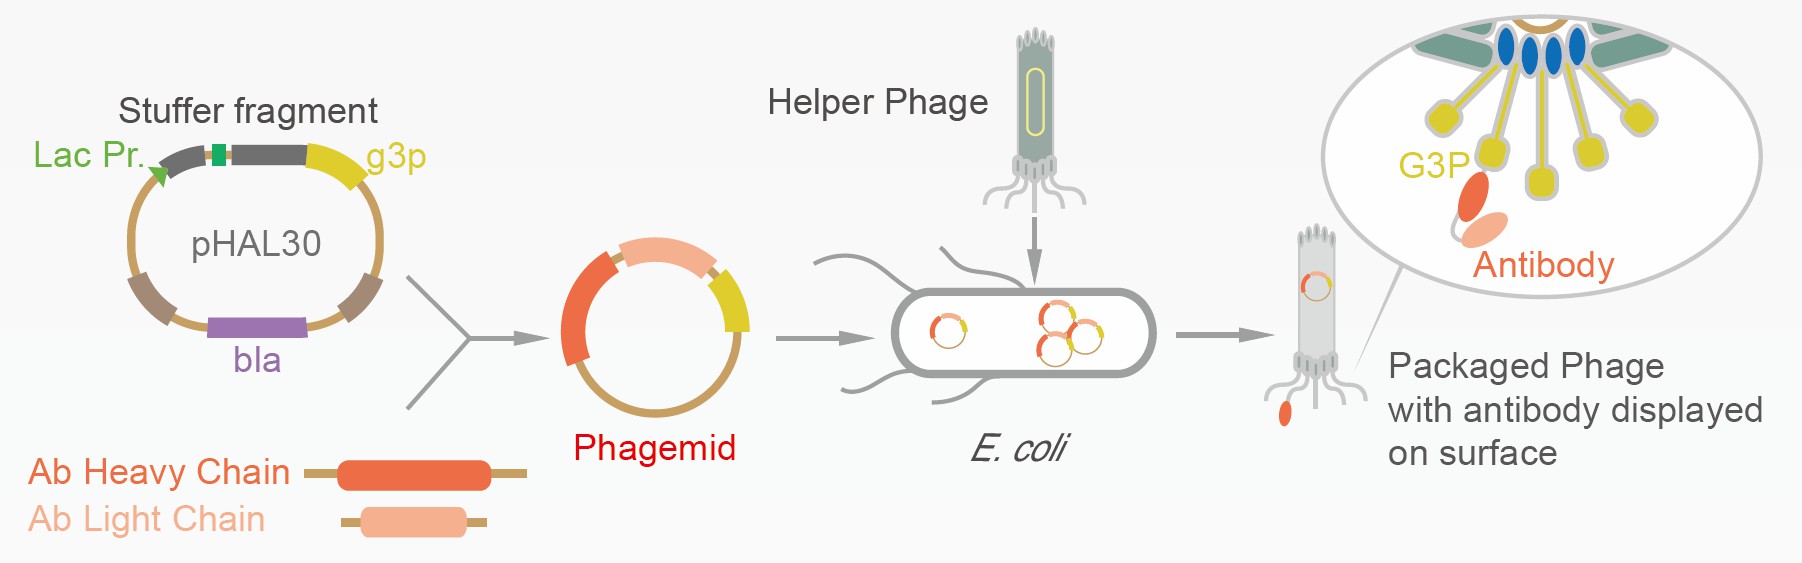 hagemid system for antibody display